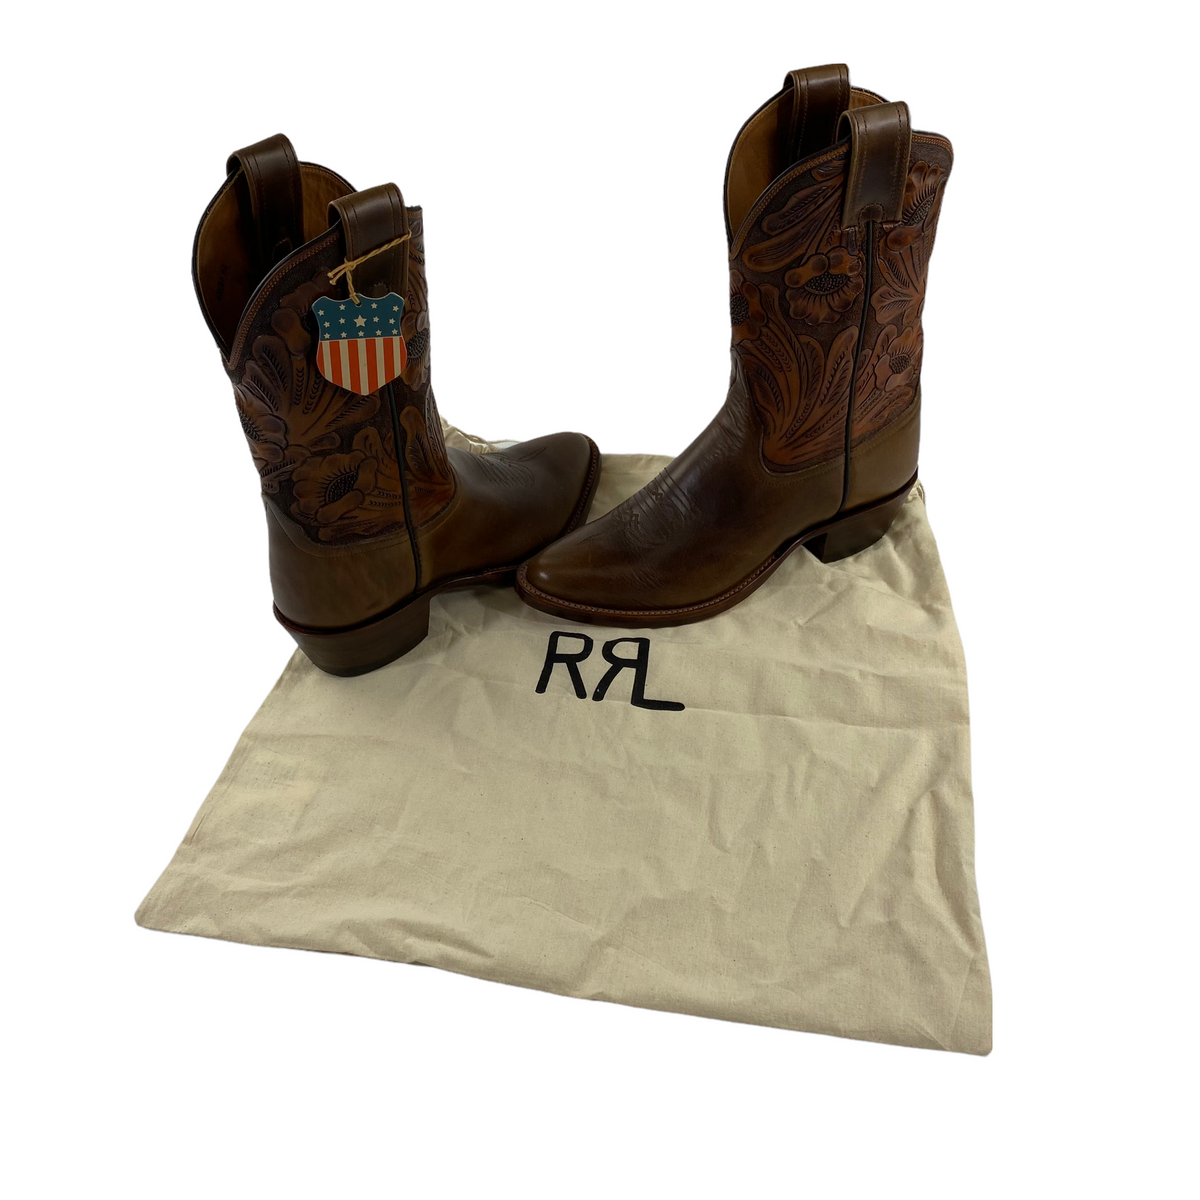 RRL cowboy boots 8d – Vintage Sponsor